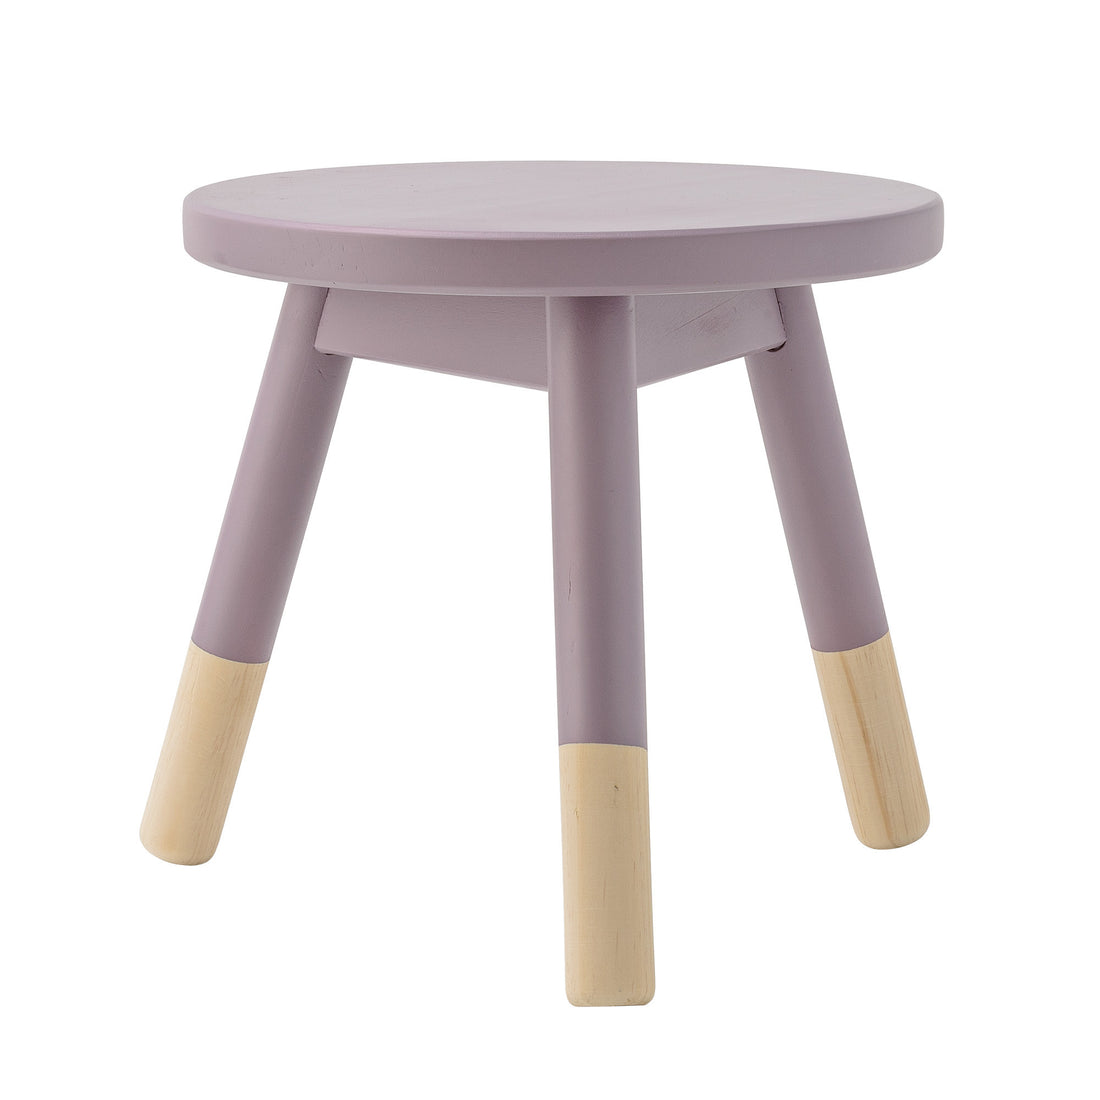 bloomingville-moon-purple-and-nature-stool-furniture-bmv-50201179-01